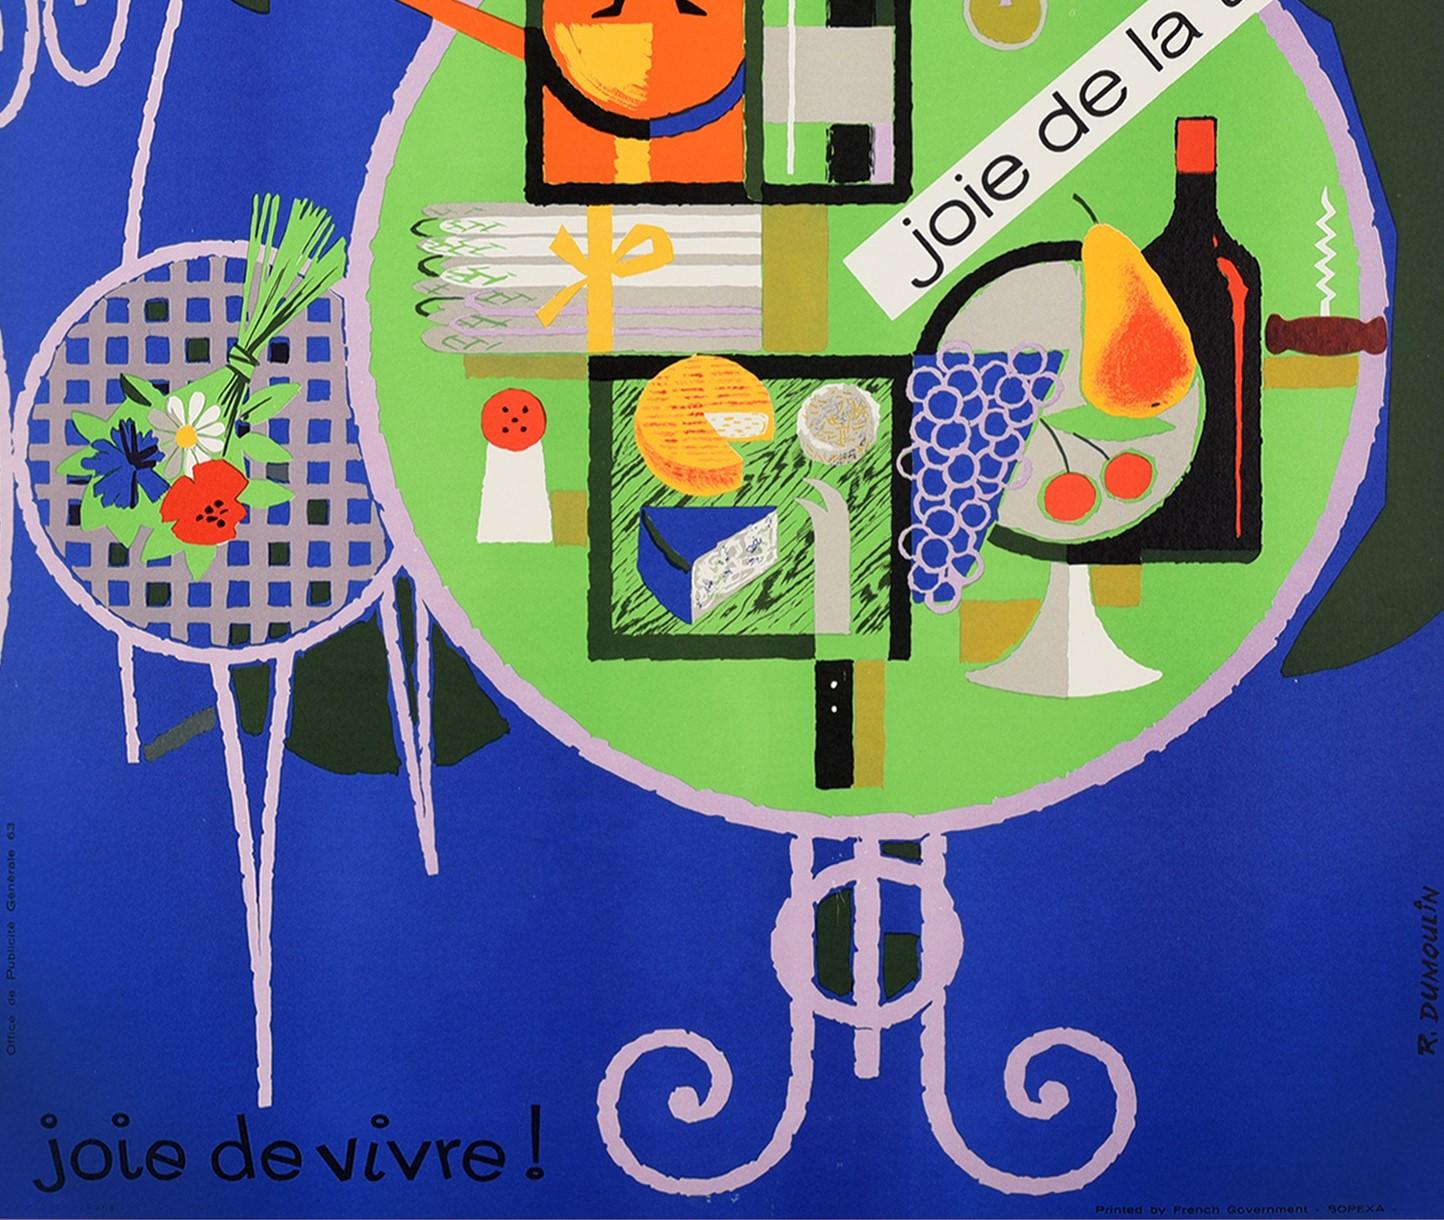 Original Vintage Poster France Joie De La Table Joie De Vivre French Wine & Food In Good Condition For Sale In London, GB